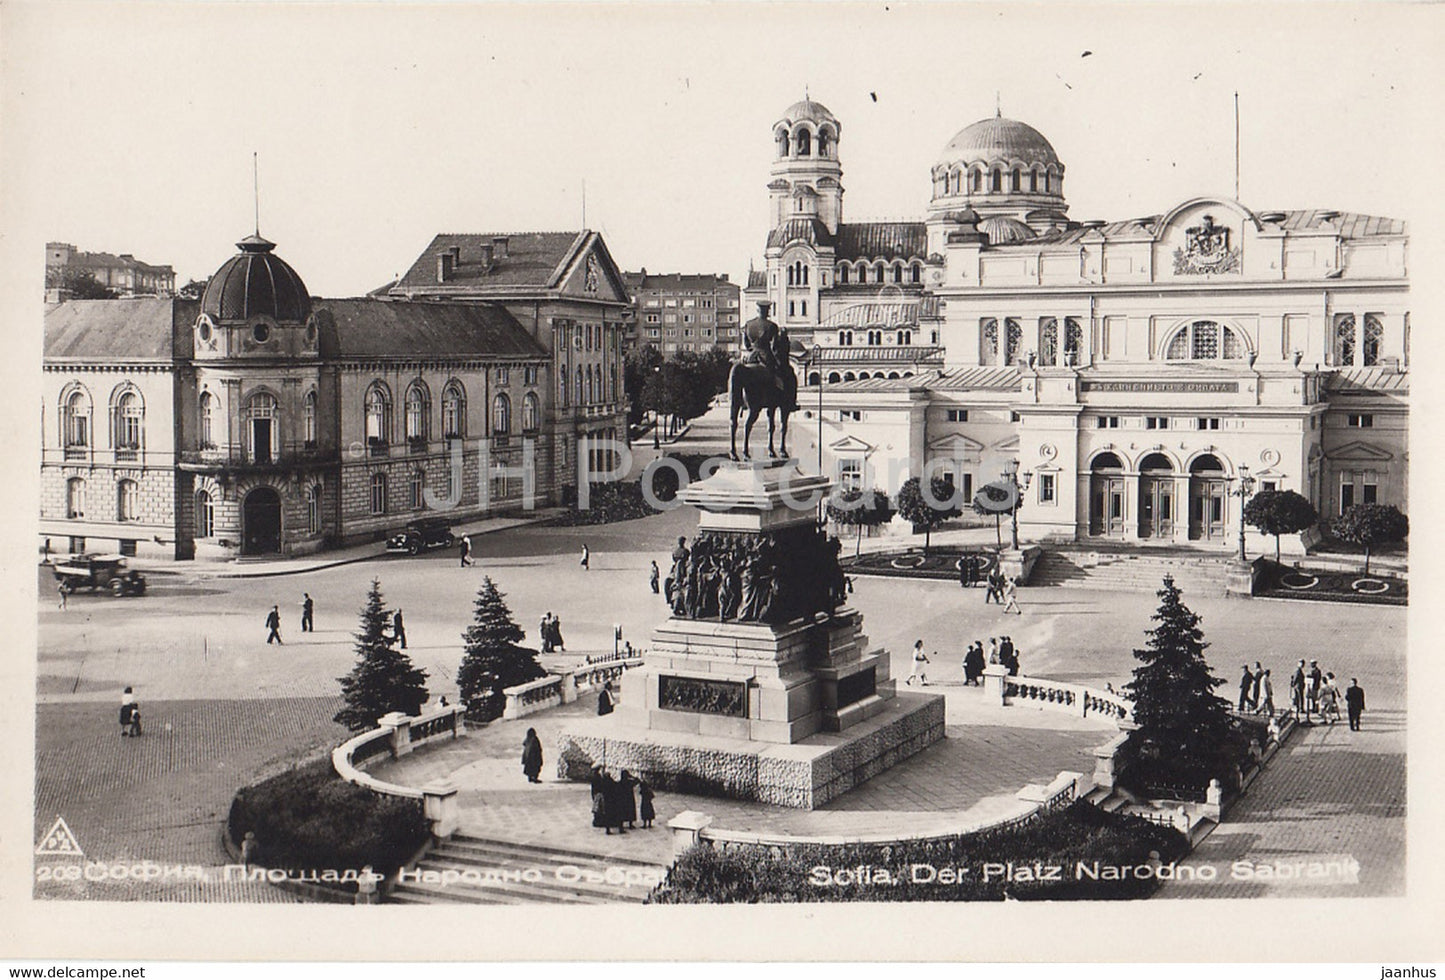 Sofia - Der Platz Narodno Sabranie - old postcard - Bulgaria - unused - JH Postcards